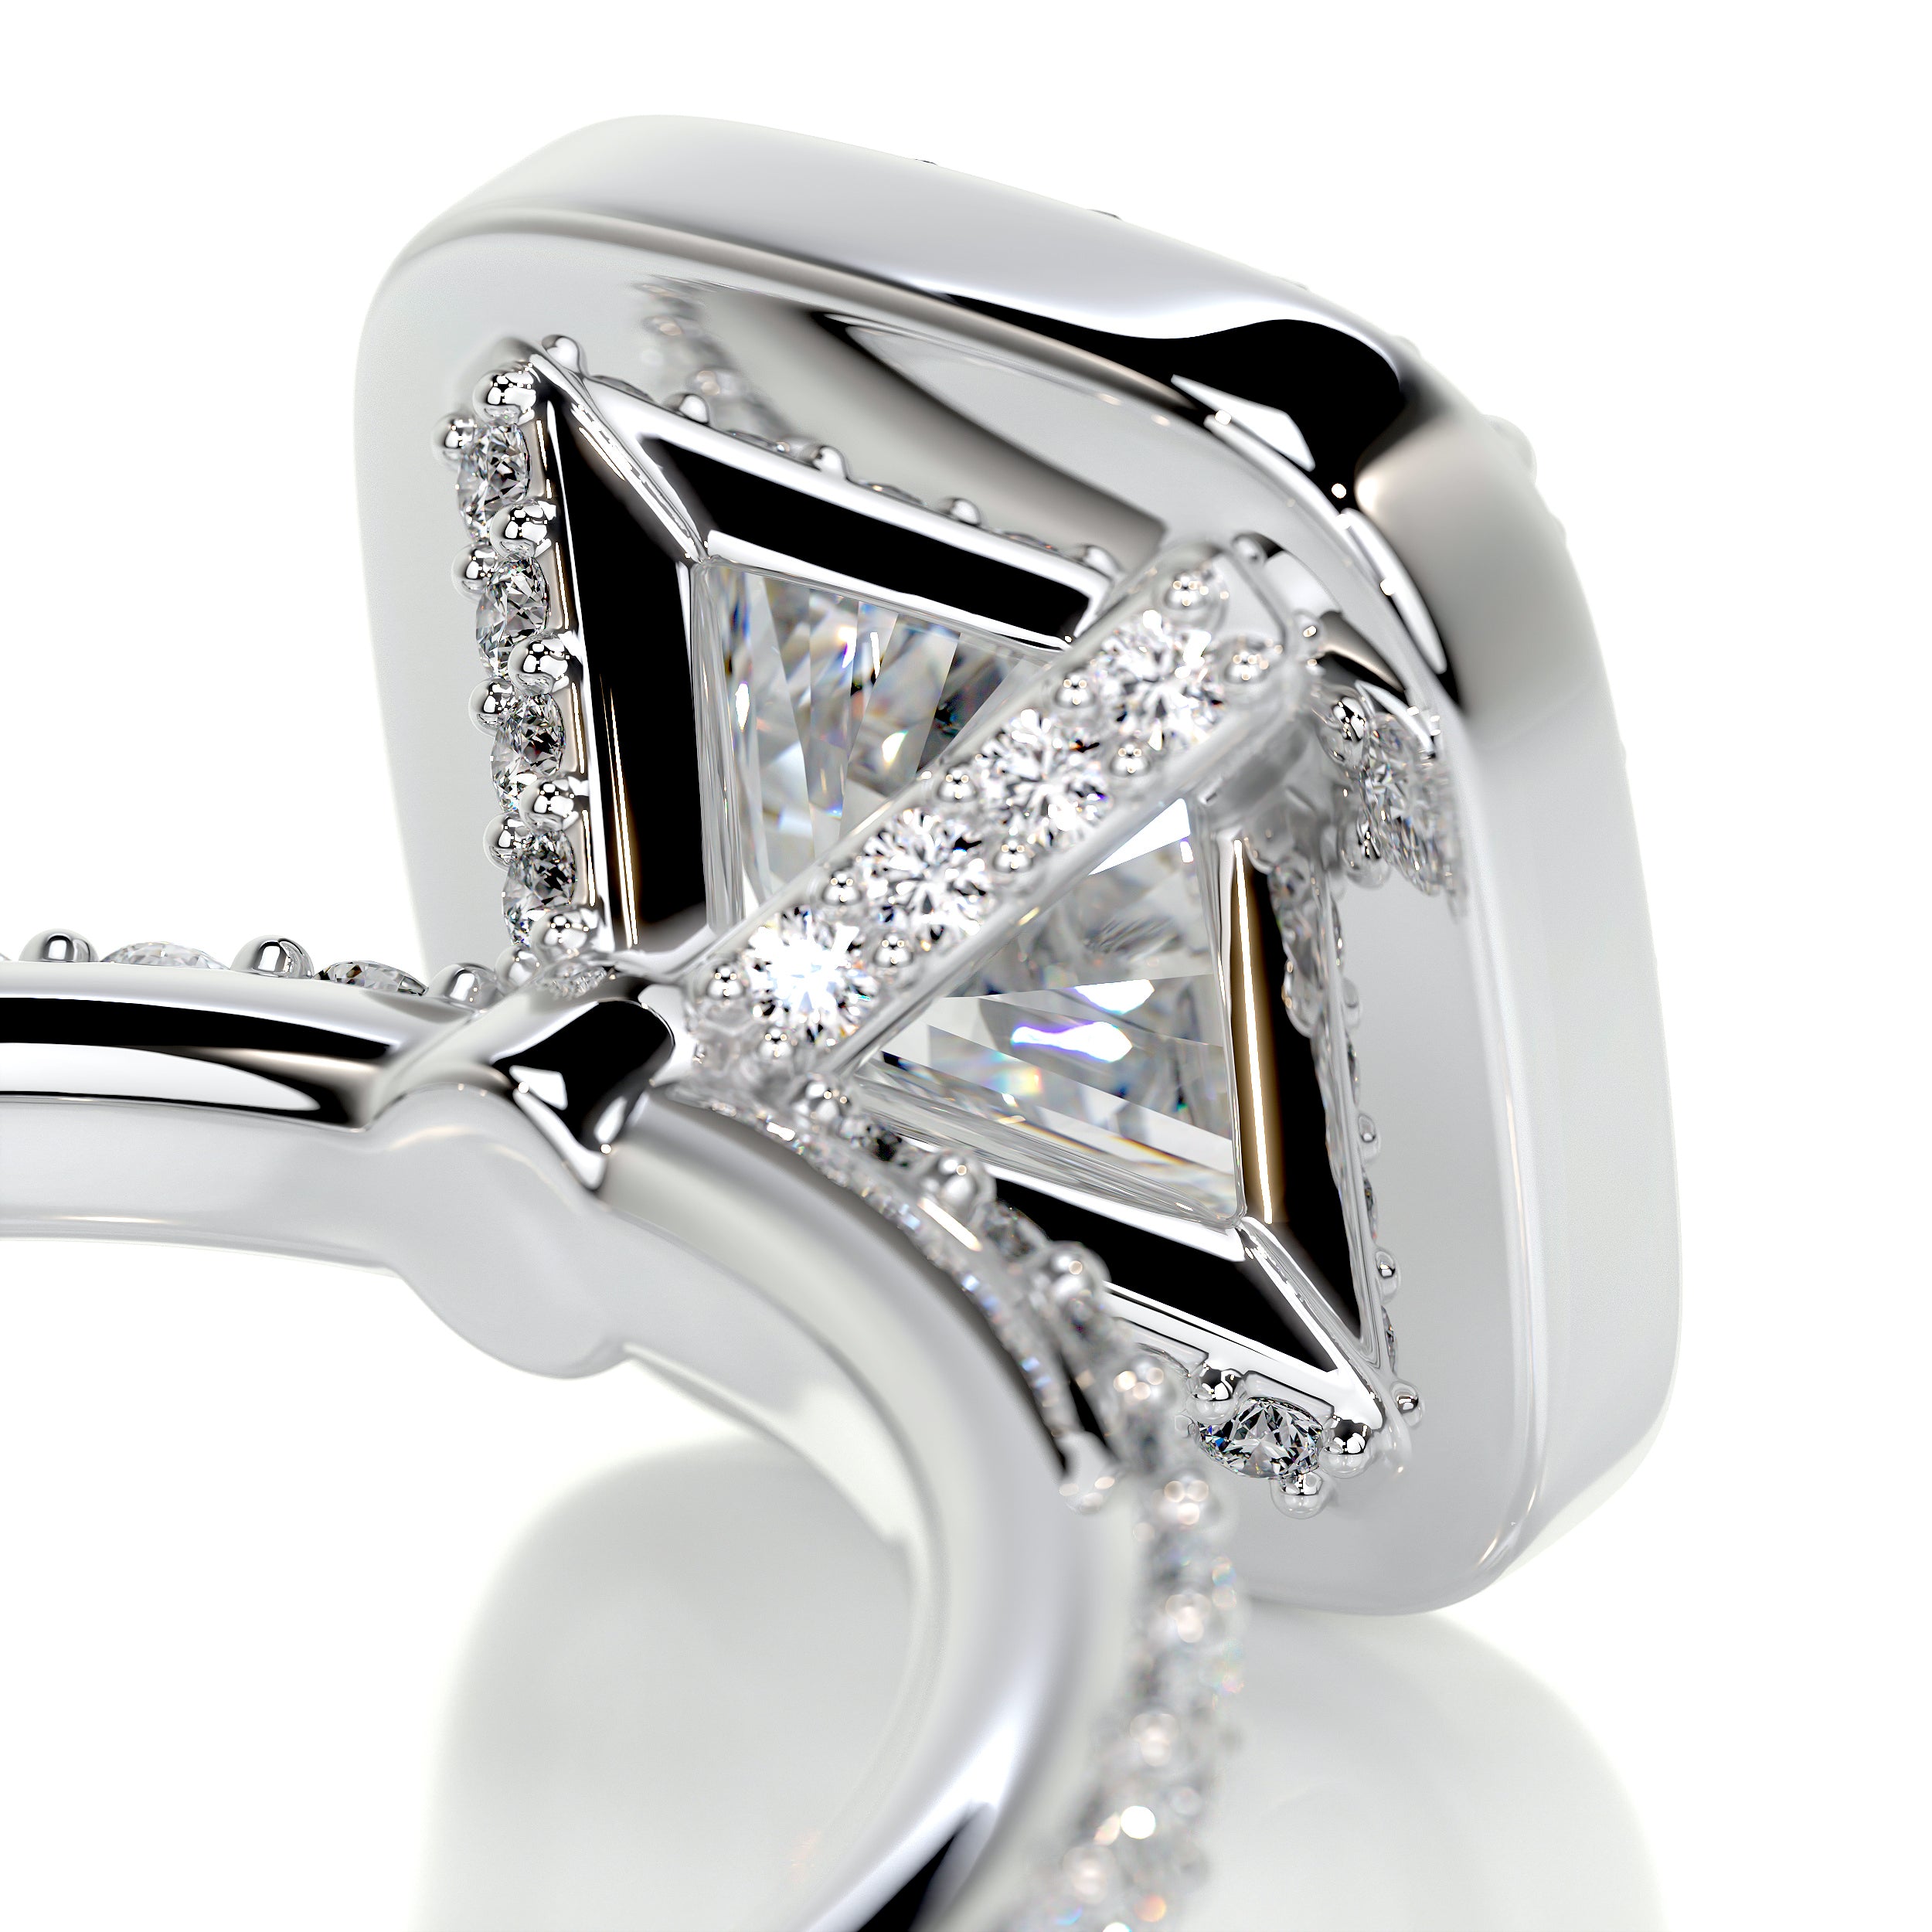 Paula Diamond Engagement Ring -18K White Gold